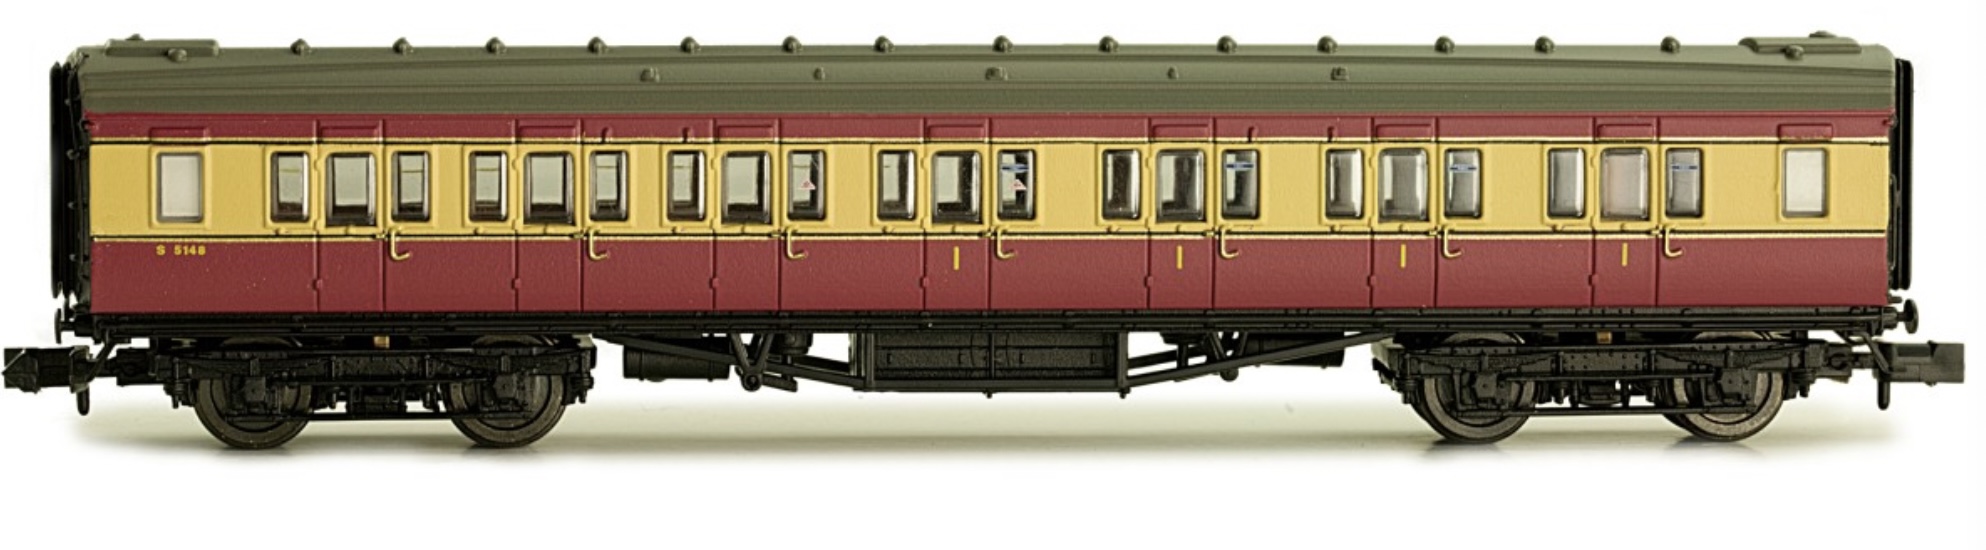 N Scale - Dapol - 2P-012-751 - Passenger Car, Coach, Maunsell, Composite - British Rail - 5148